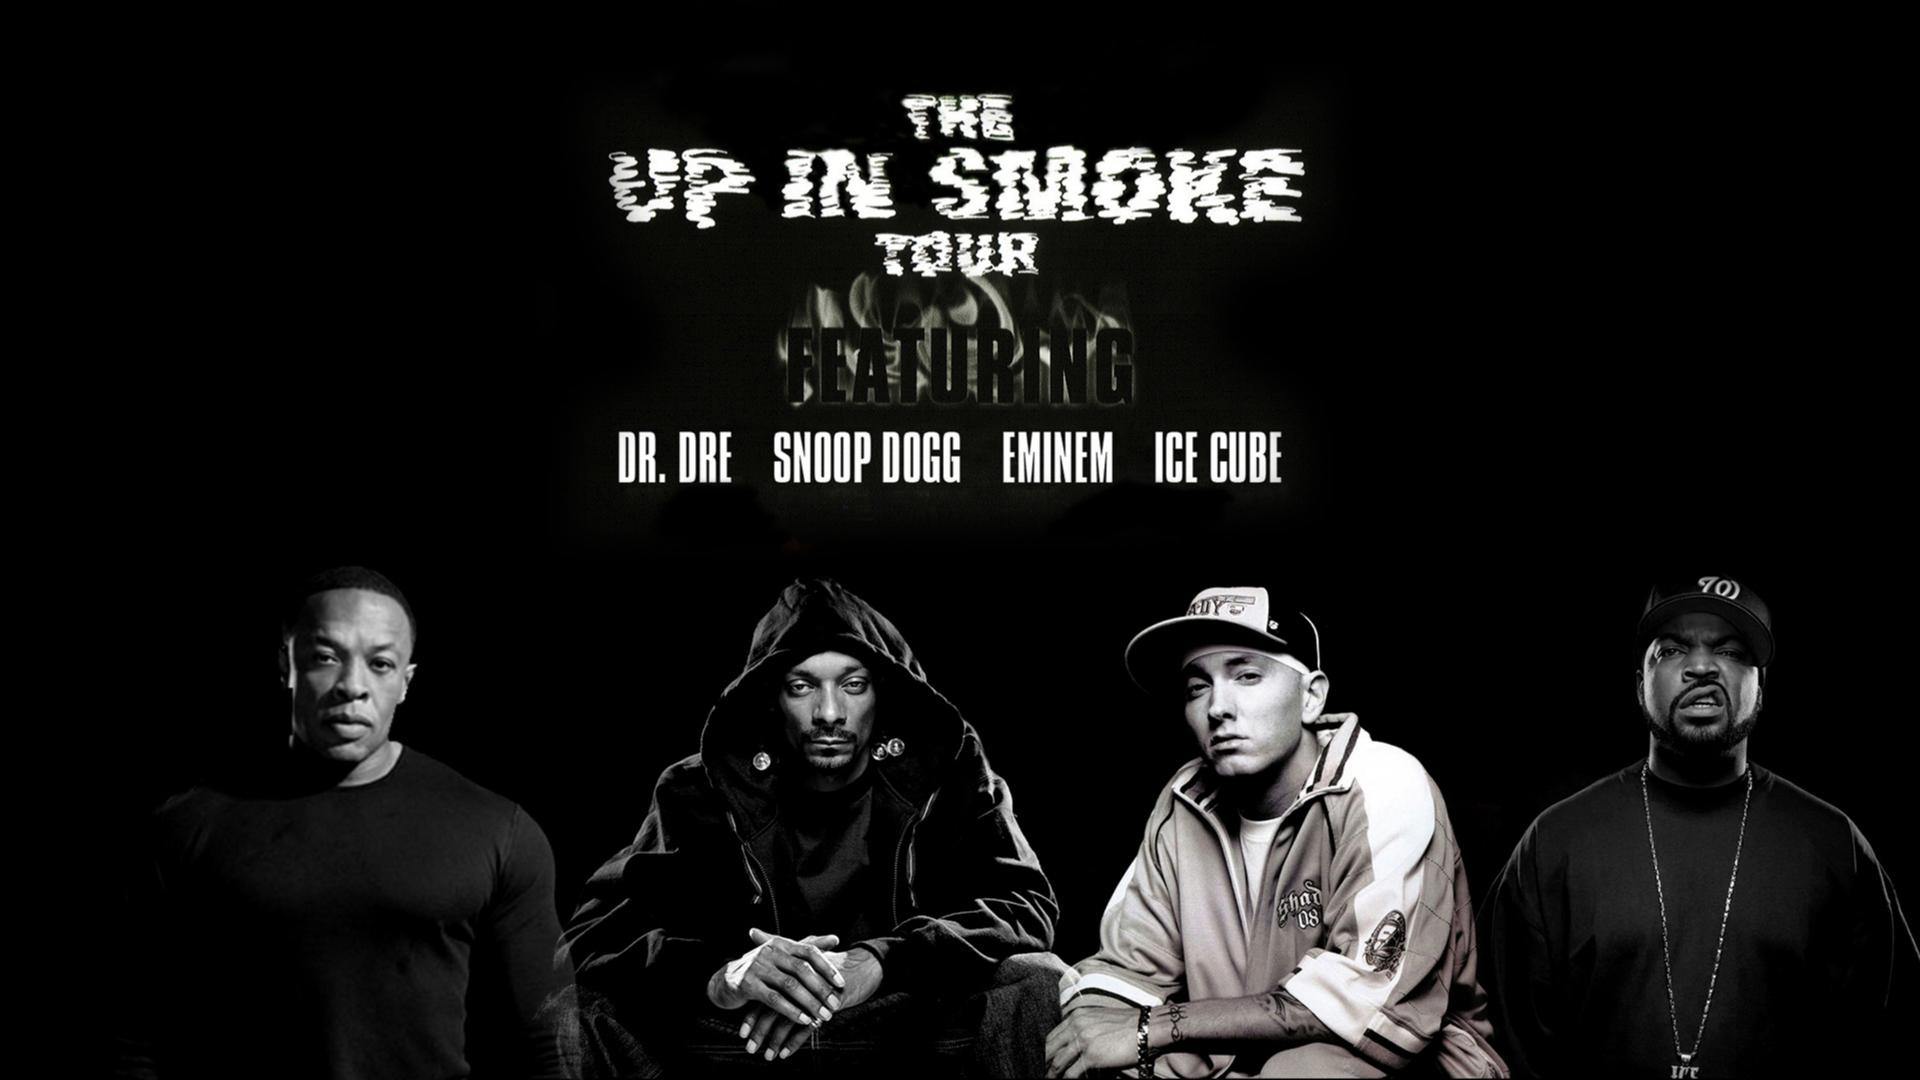 the up in smoke tour bg audio